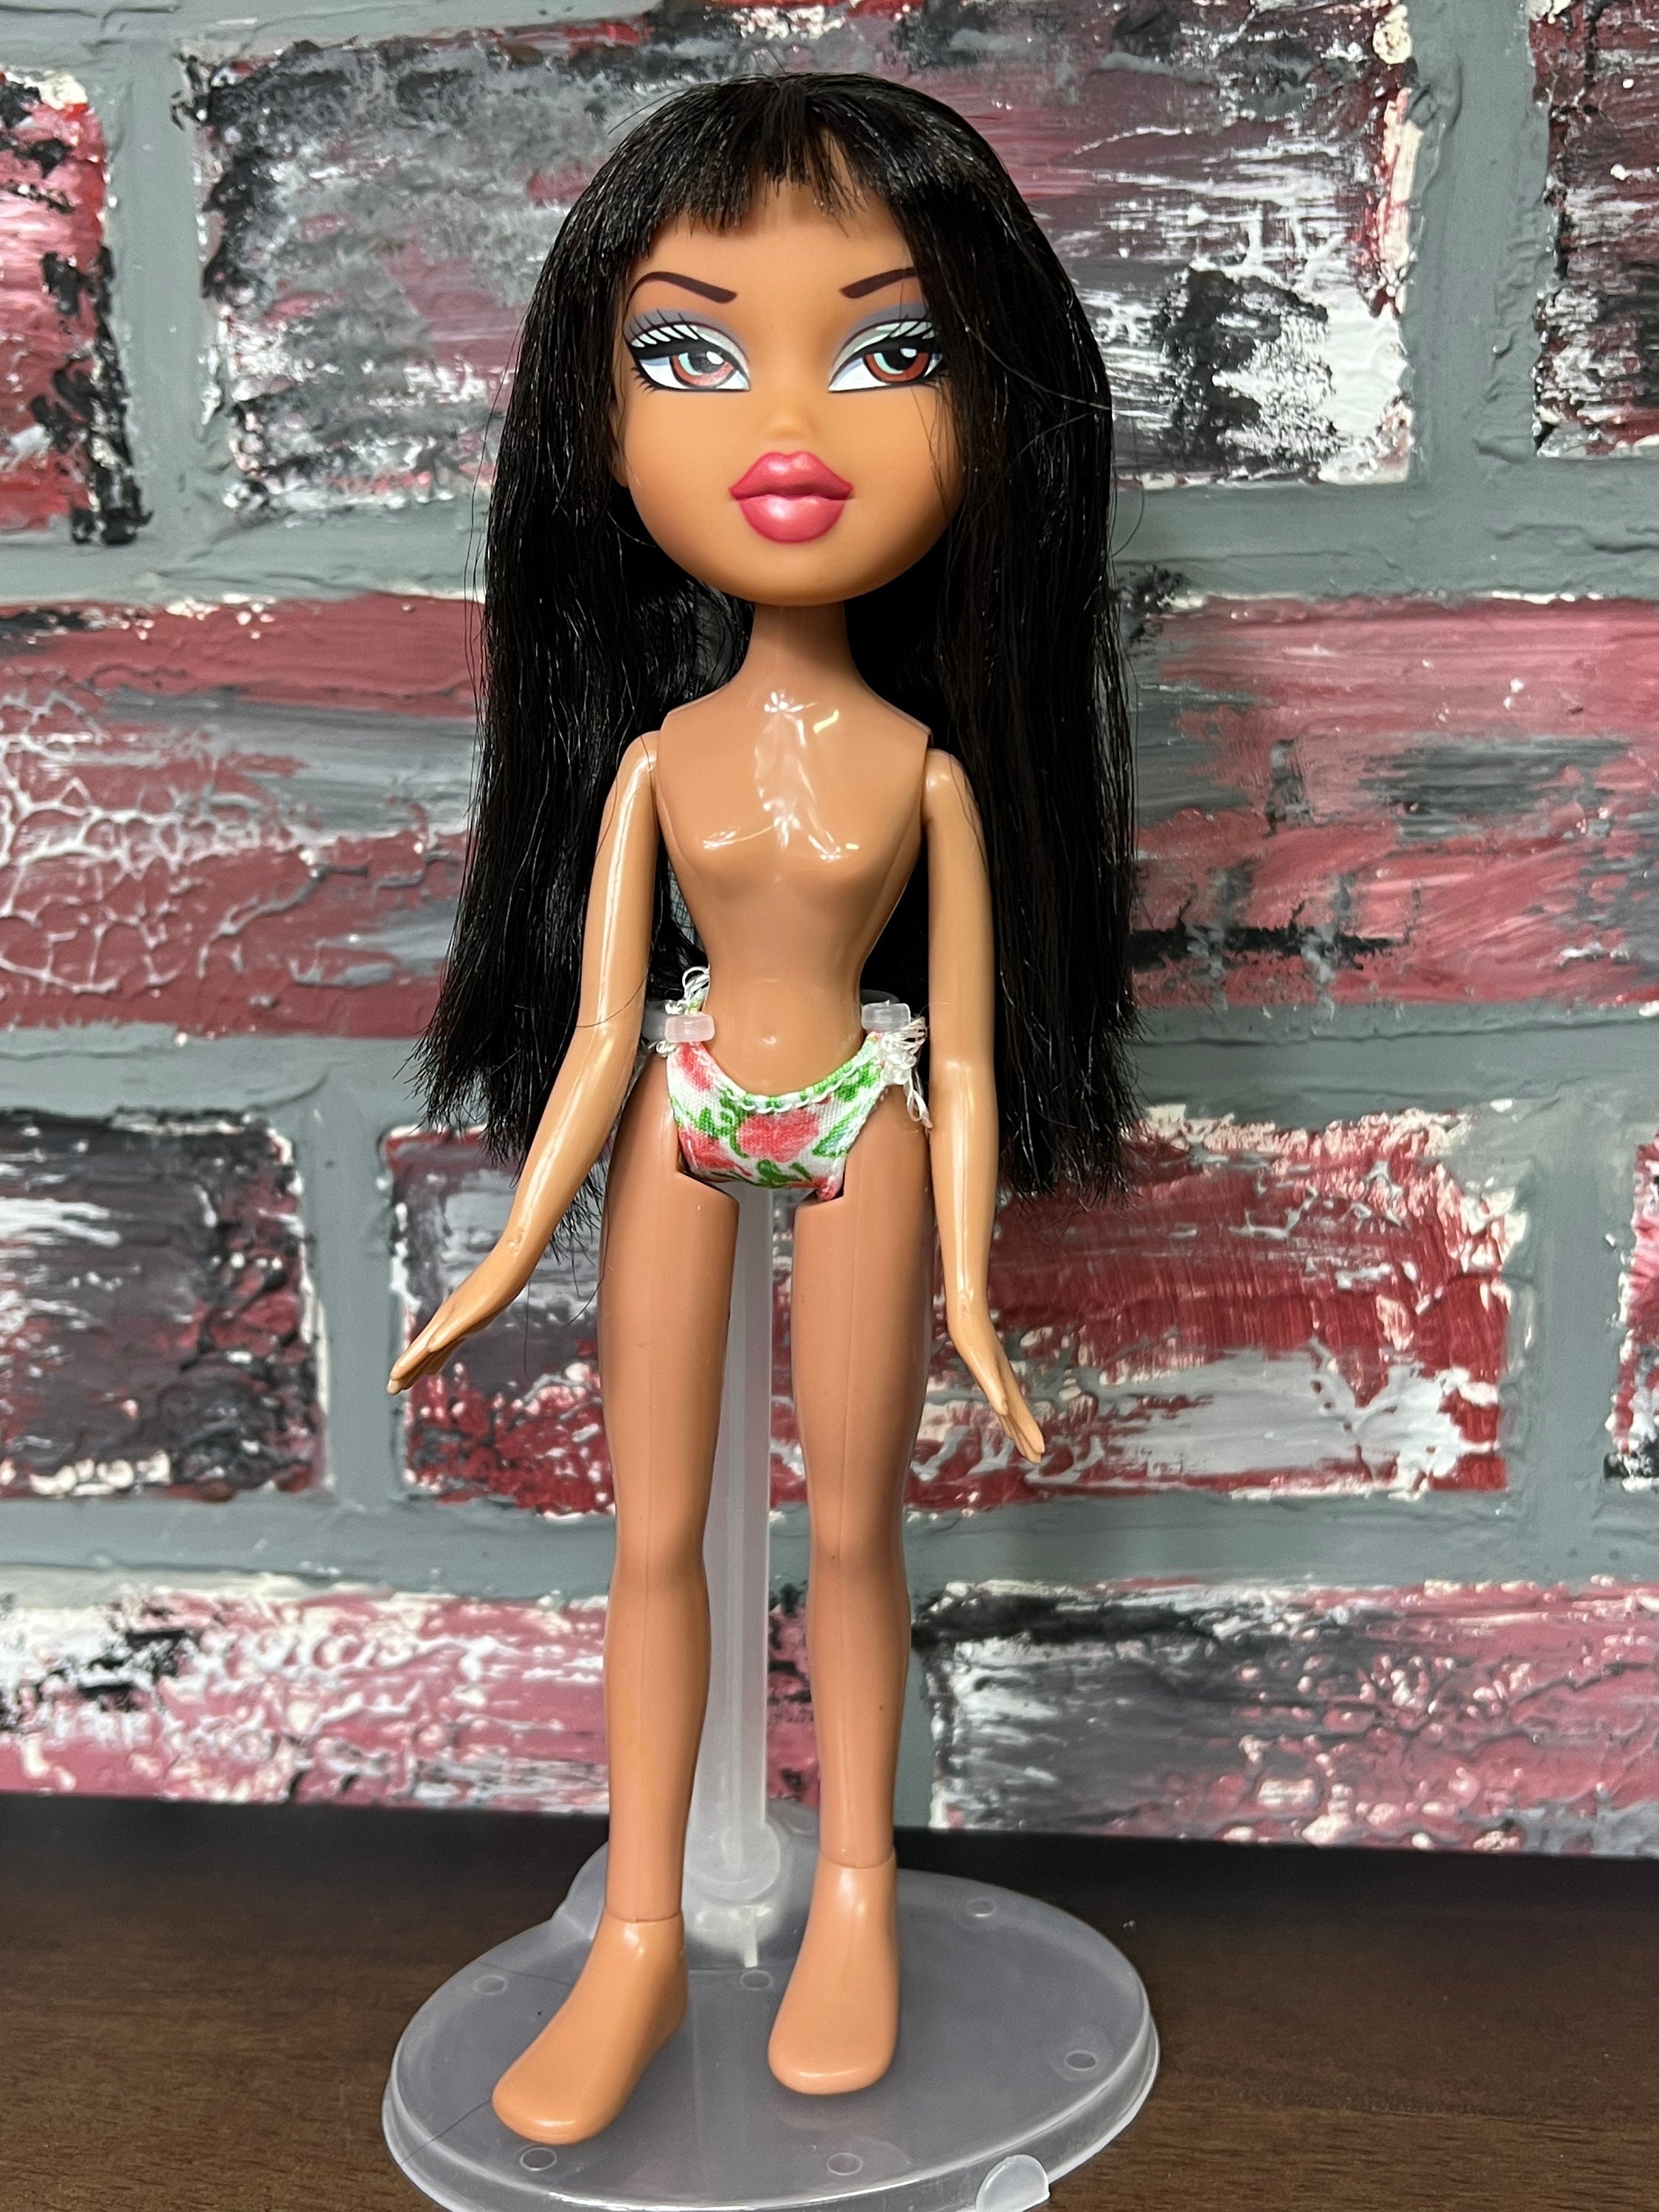 BRATZ  Jade sun-kissed summer collection doll Brand new in box!!!